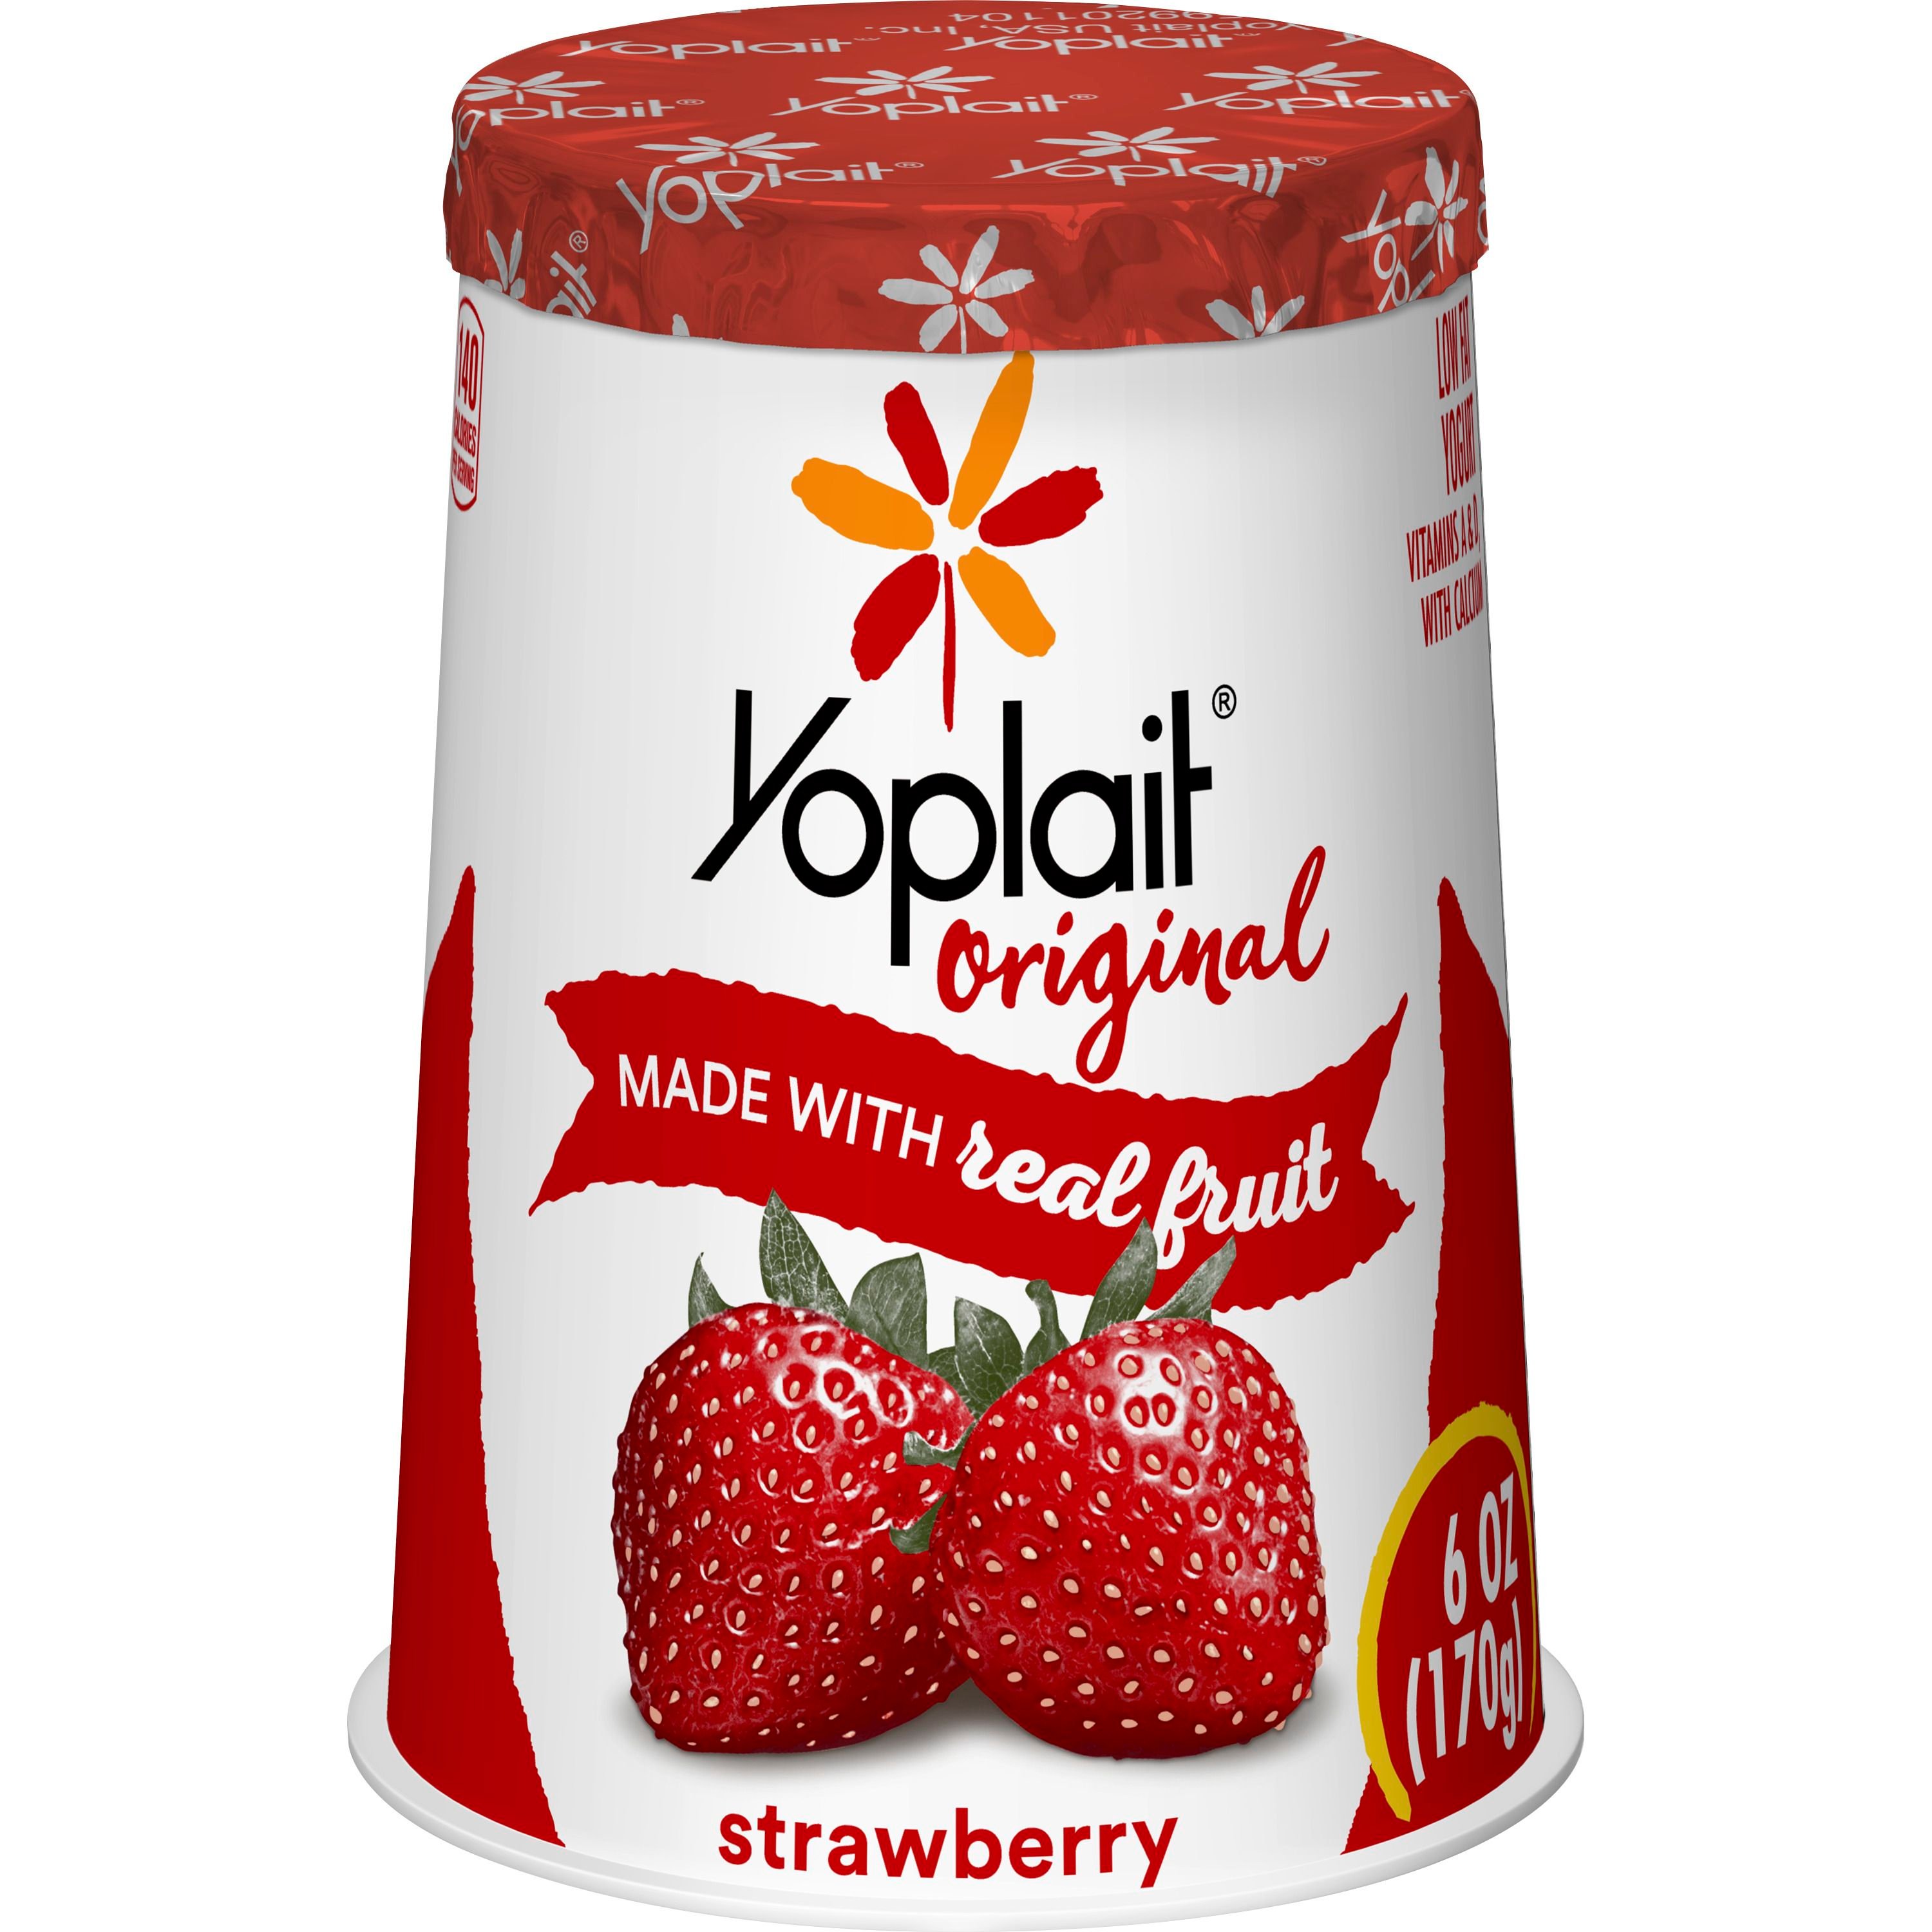 Yoplait® Original Yogurt Single Serve Cup Strawberry 6 oz